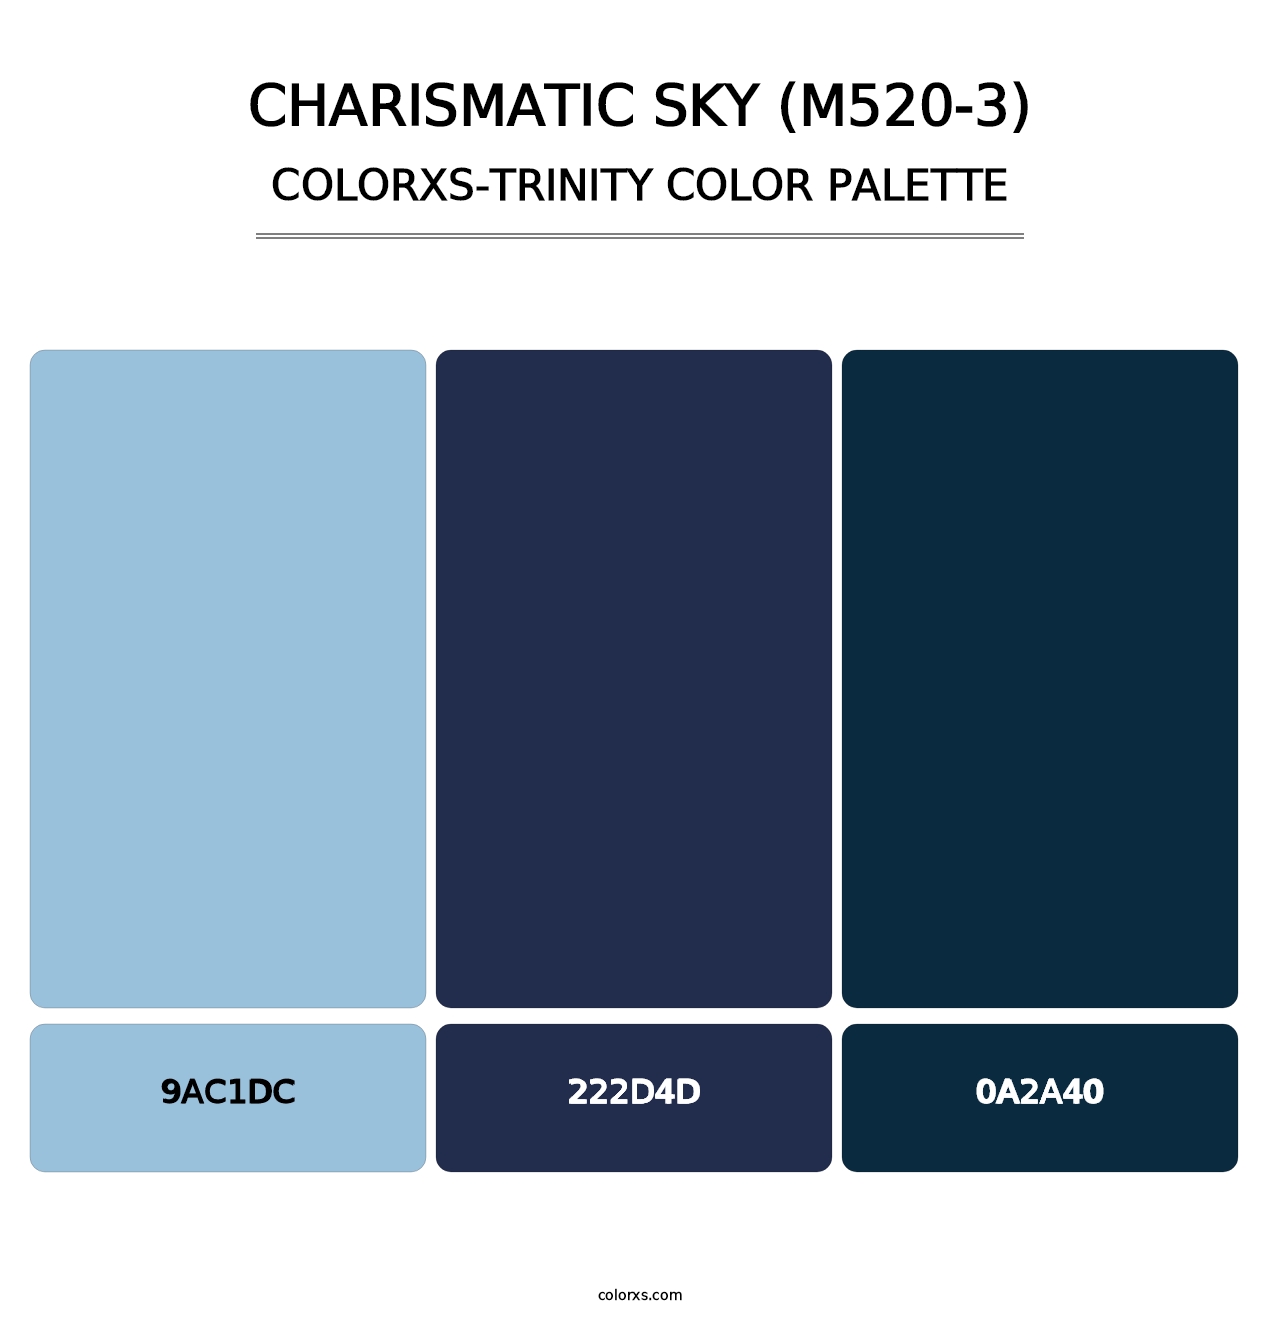 Charismatic Sky (M520-3) - Colorxs Trinity Palette